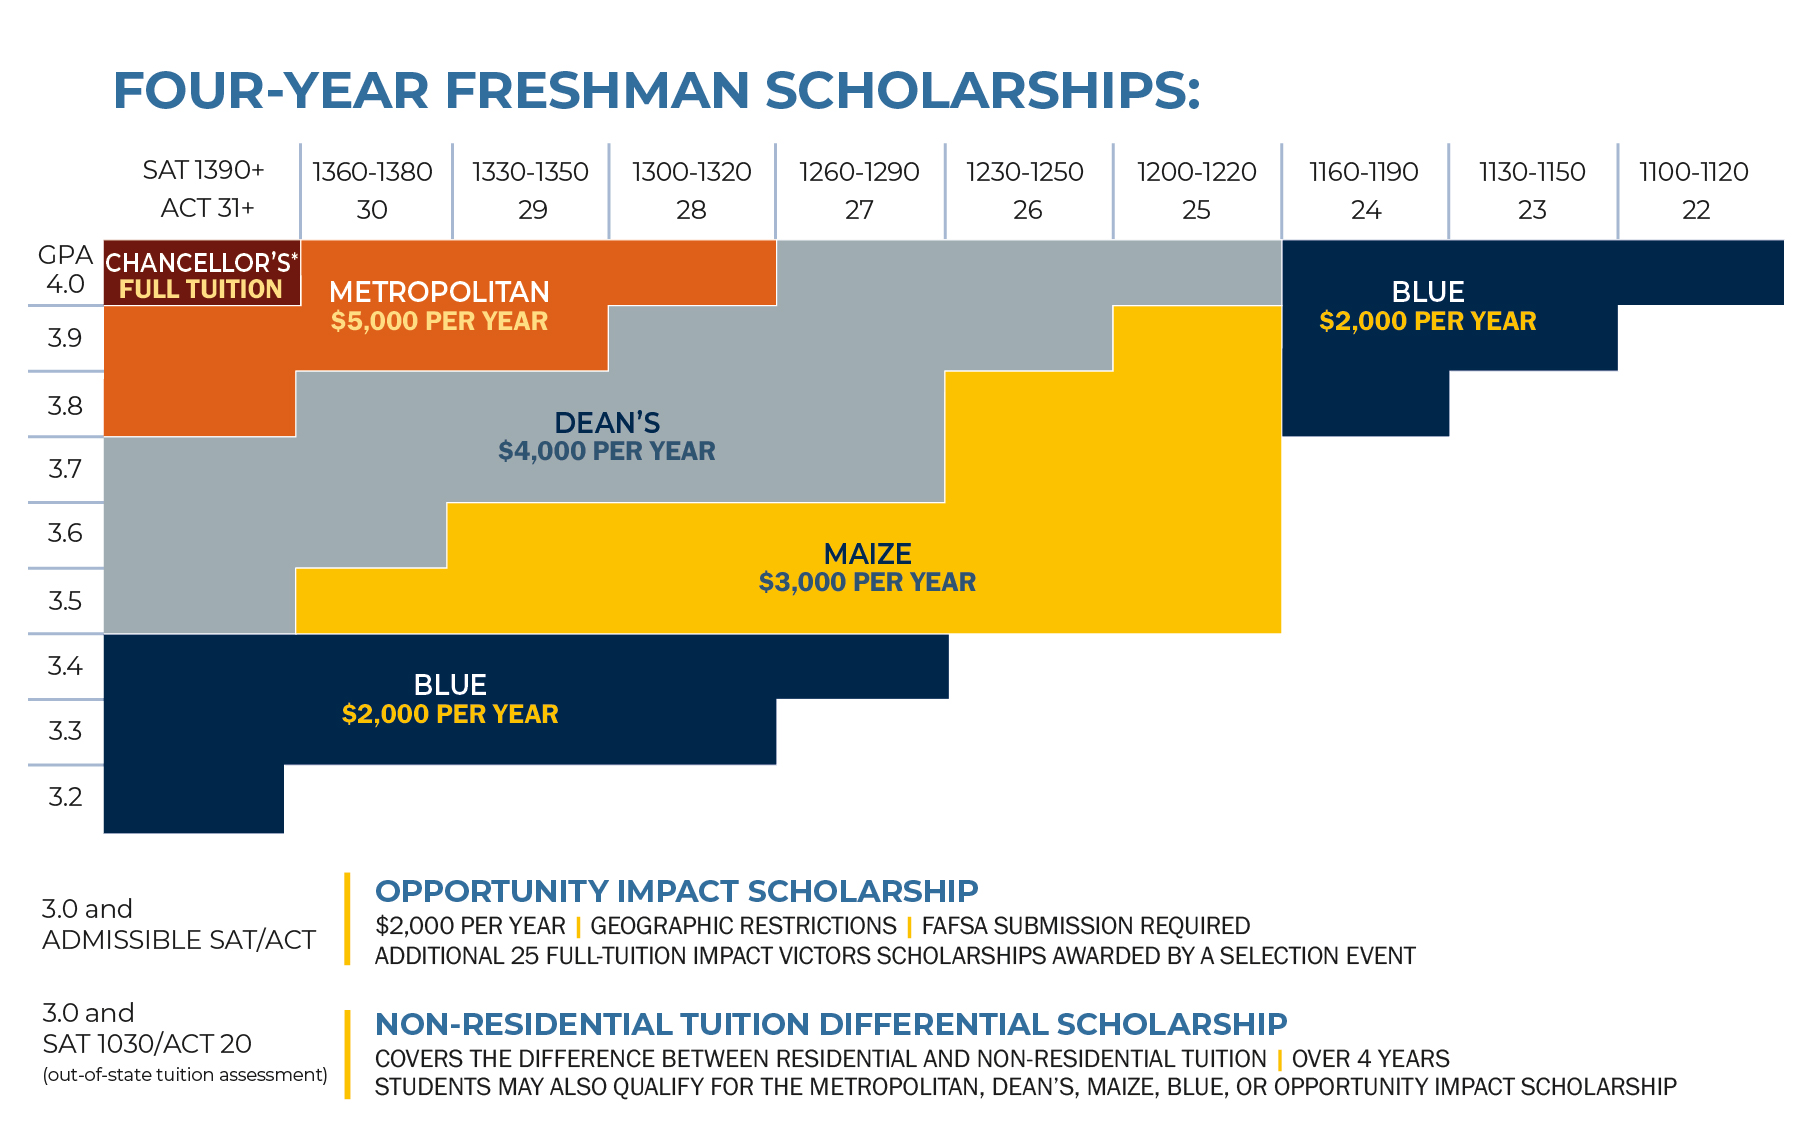 University Of Michigan Scholarship Chart